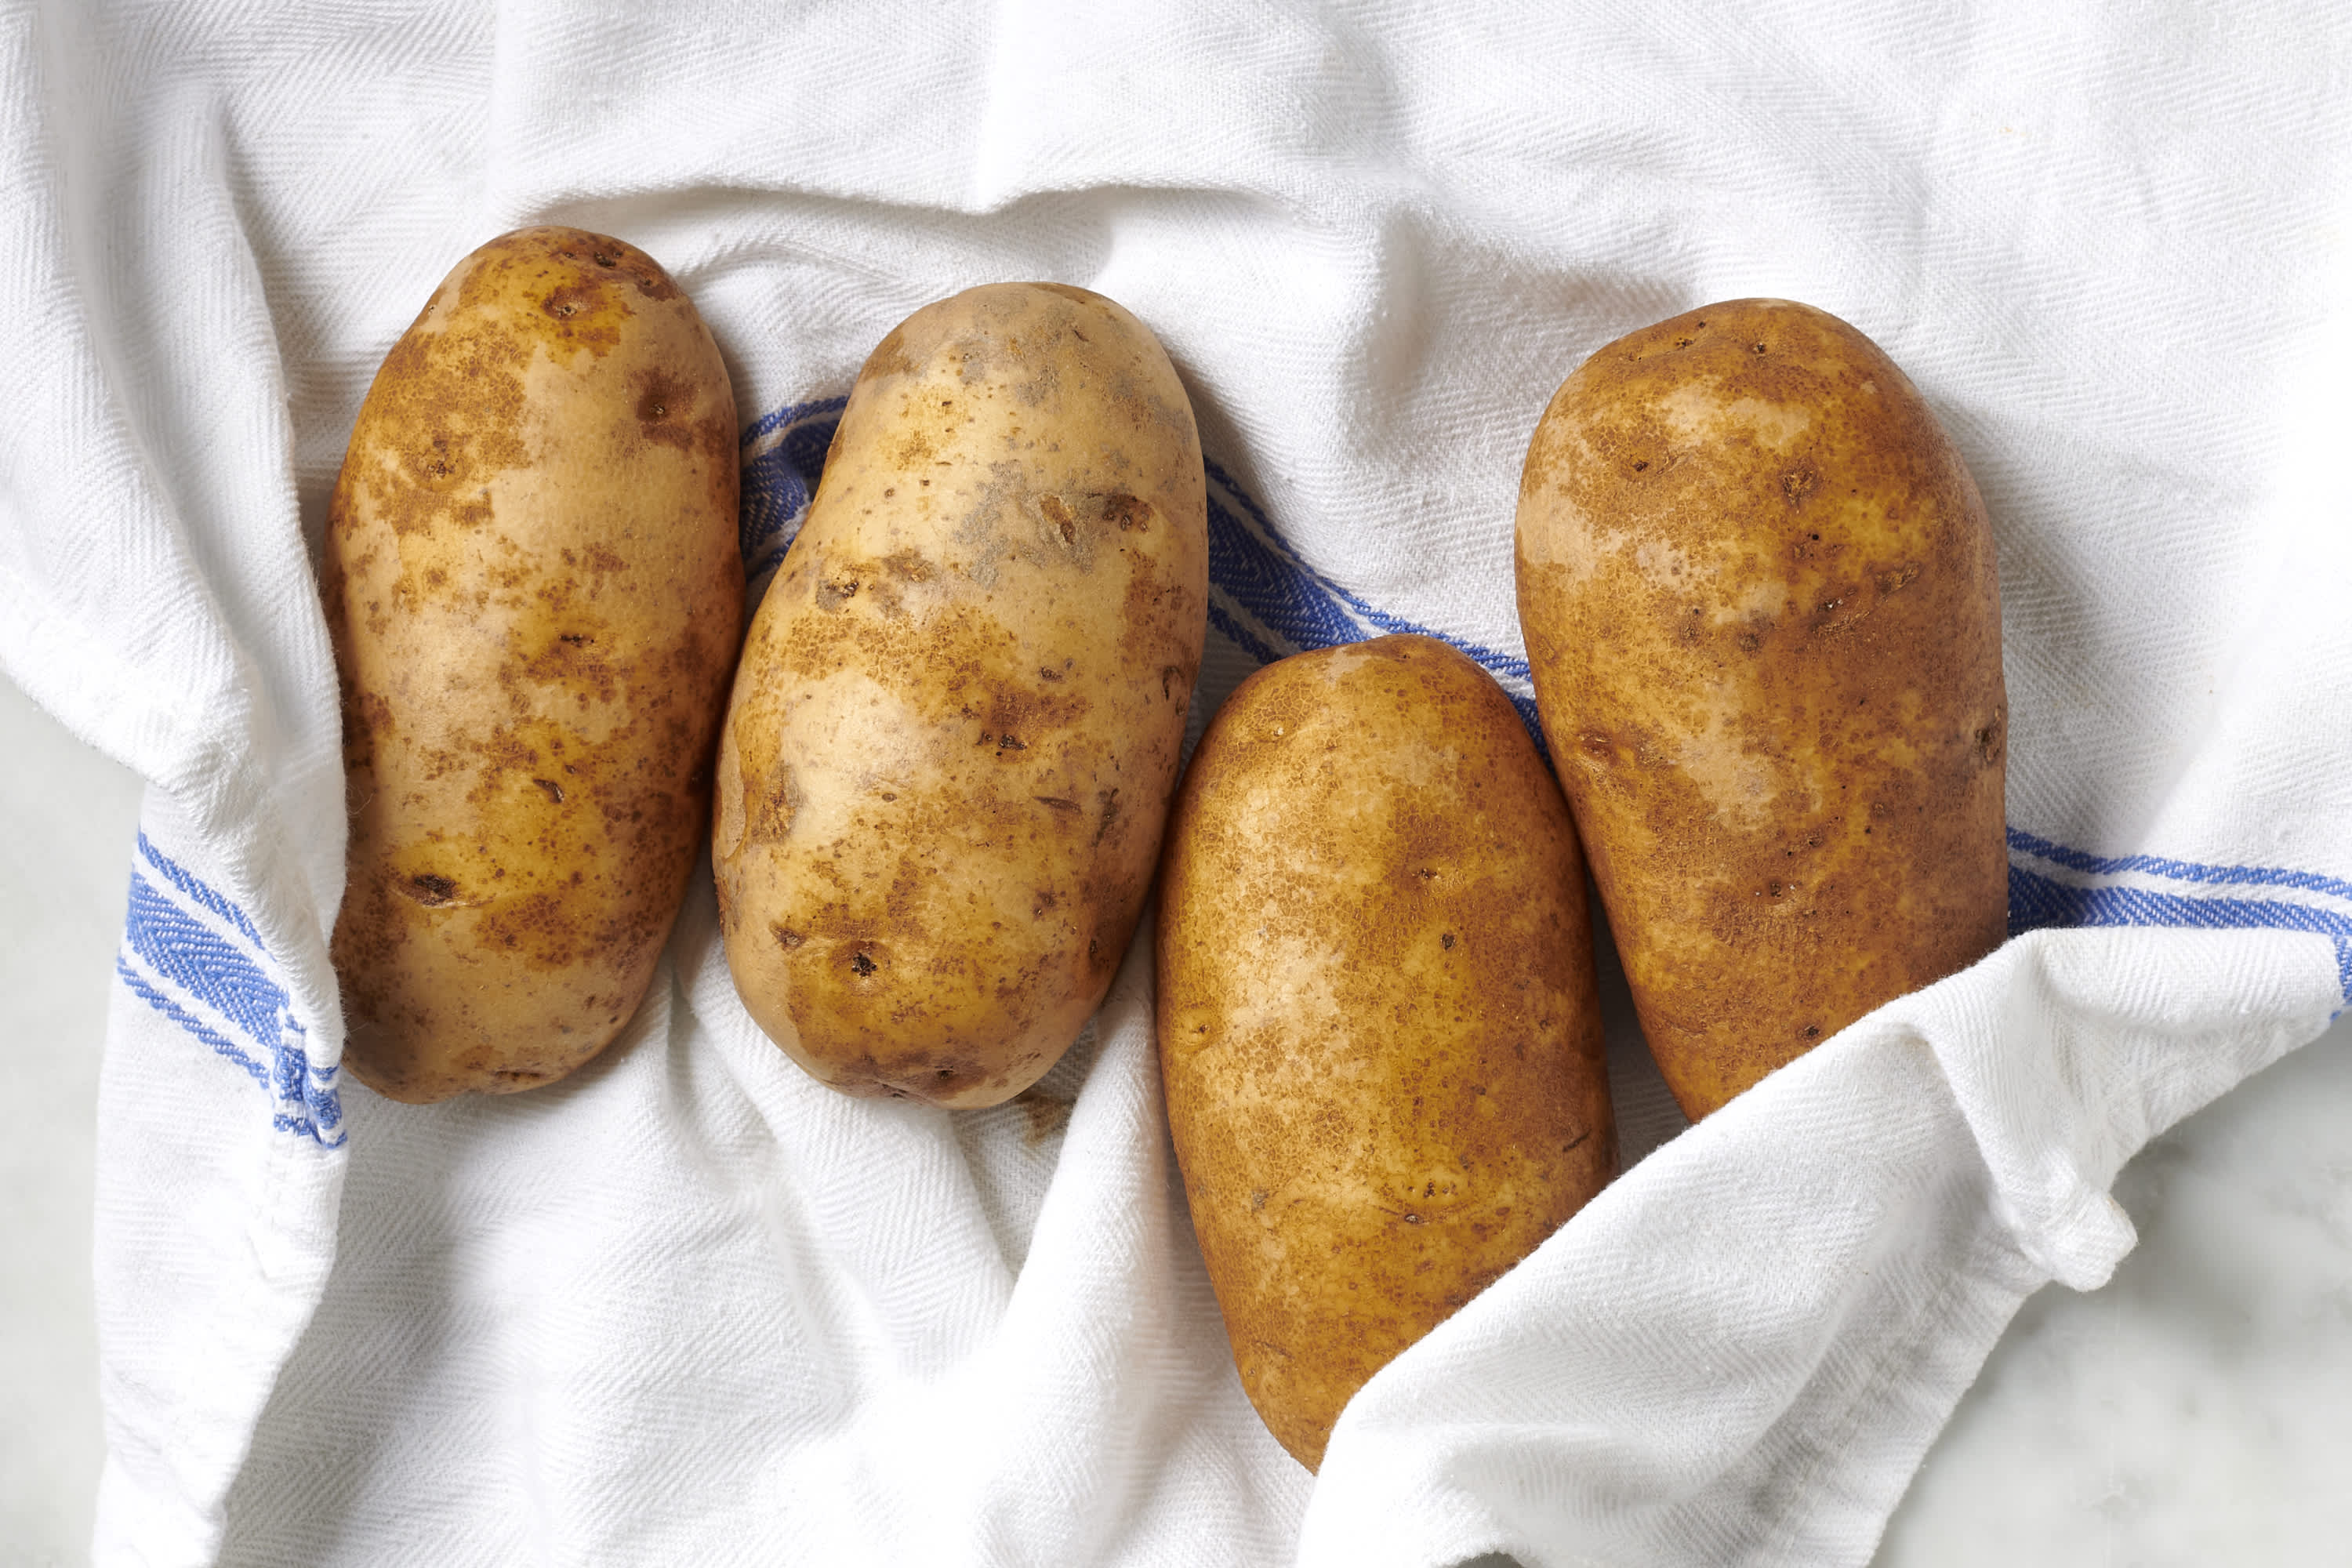 https://cdn.apartmenttherapy.info/image/upload/v1692634244/k/08-2023-how-to-make-hasselback-potatoes/how-to-make-hasselback-potatoes-508.jpg